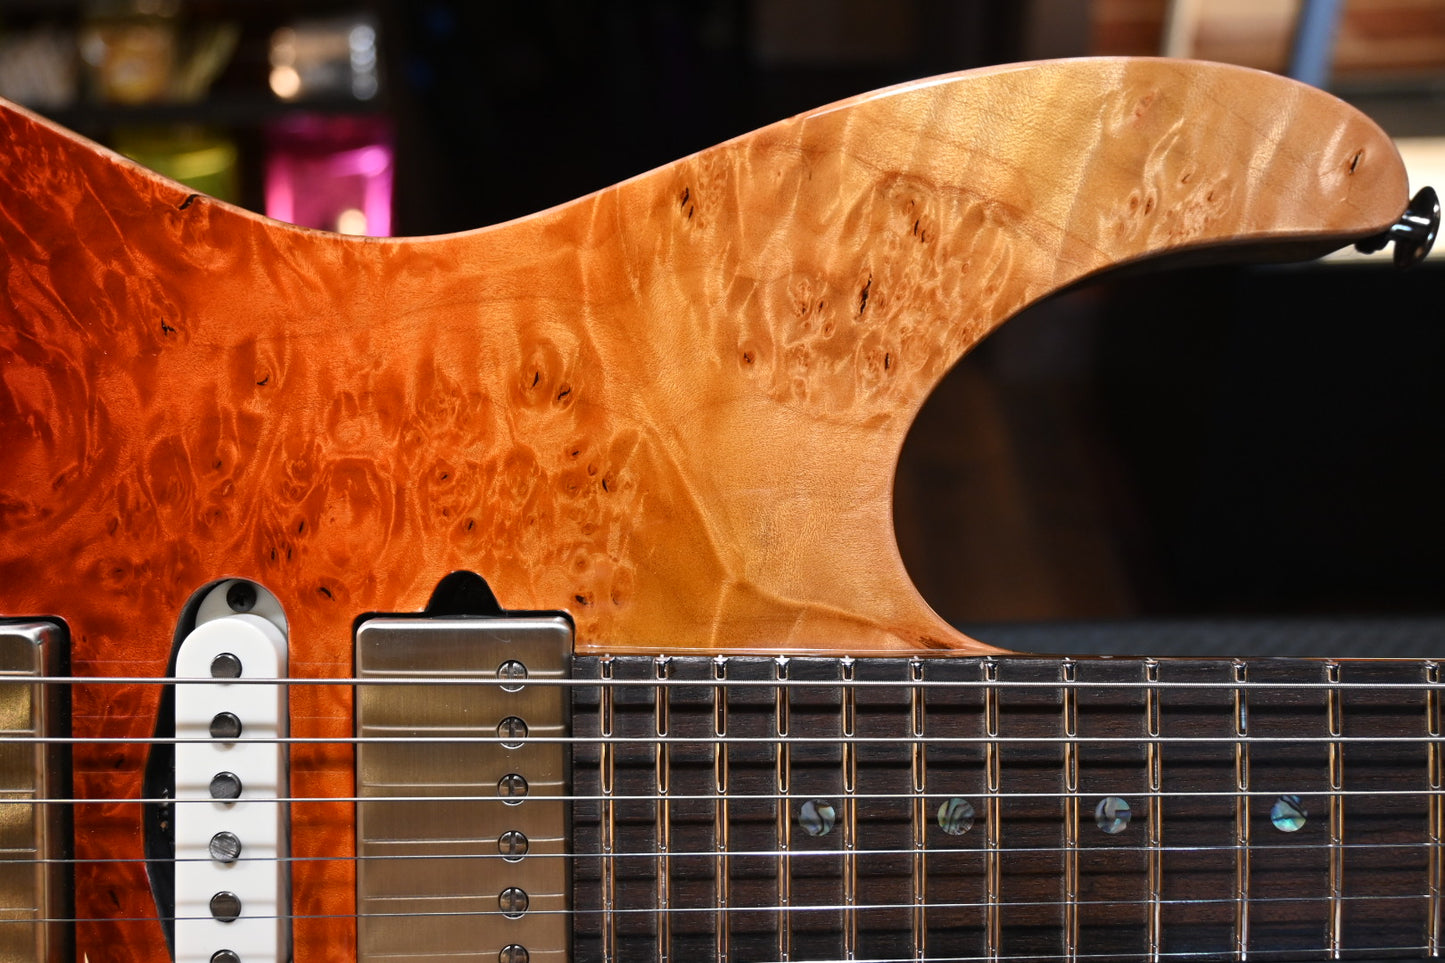 Suhr Custom Modern Carved Top Set Neck Waterfall Burl - Desert Gradient Guitar #2640 - Danville Music